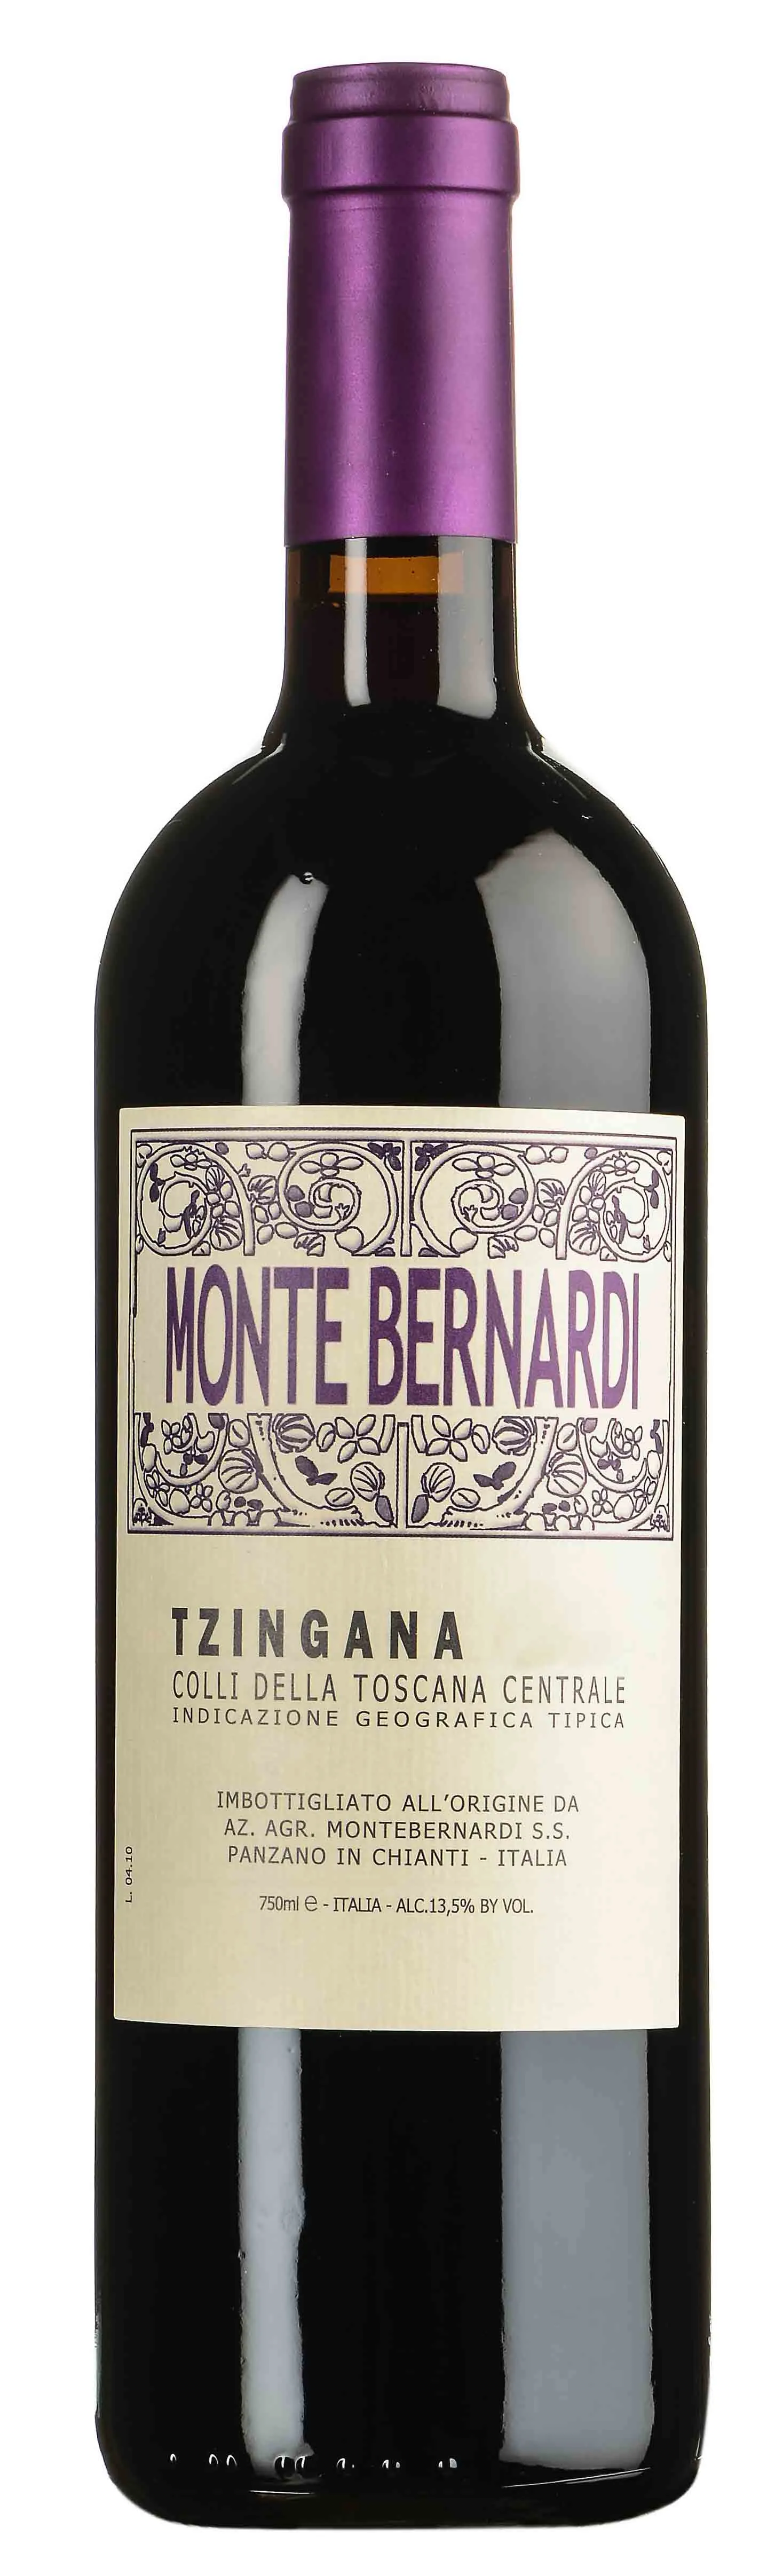 Bottle of Monte Bernardi Tzingarella from search results